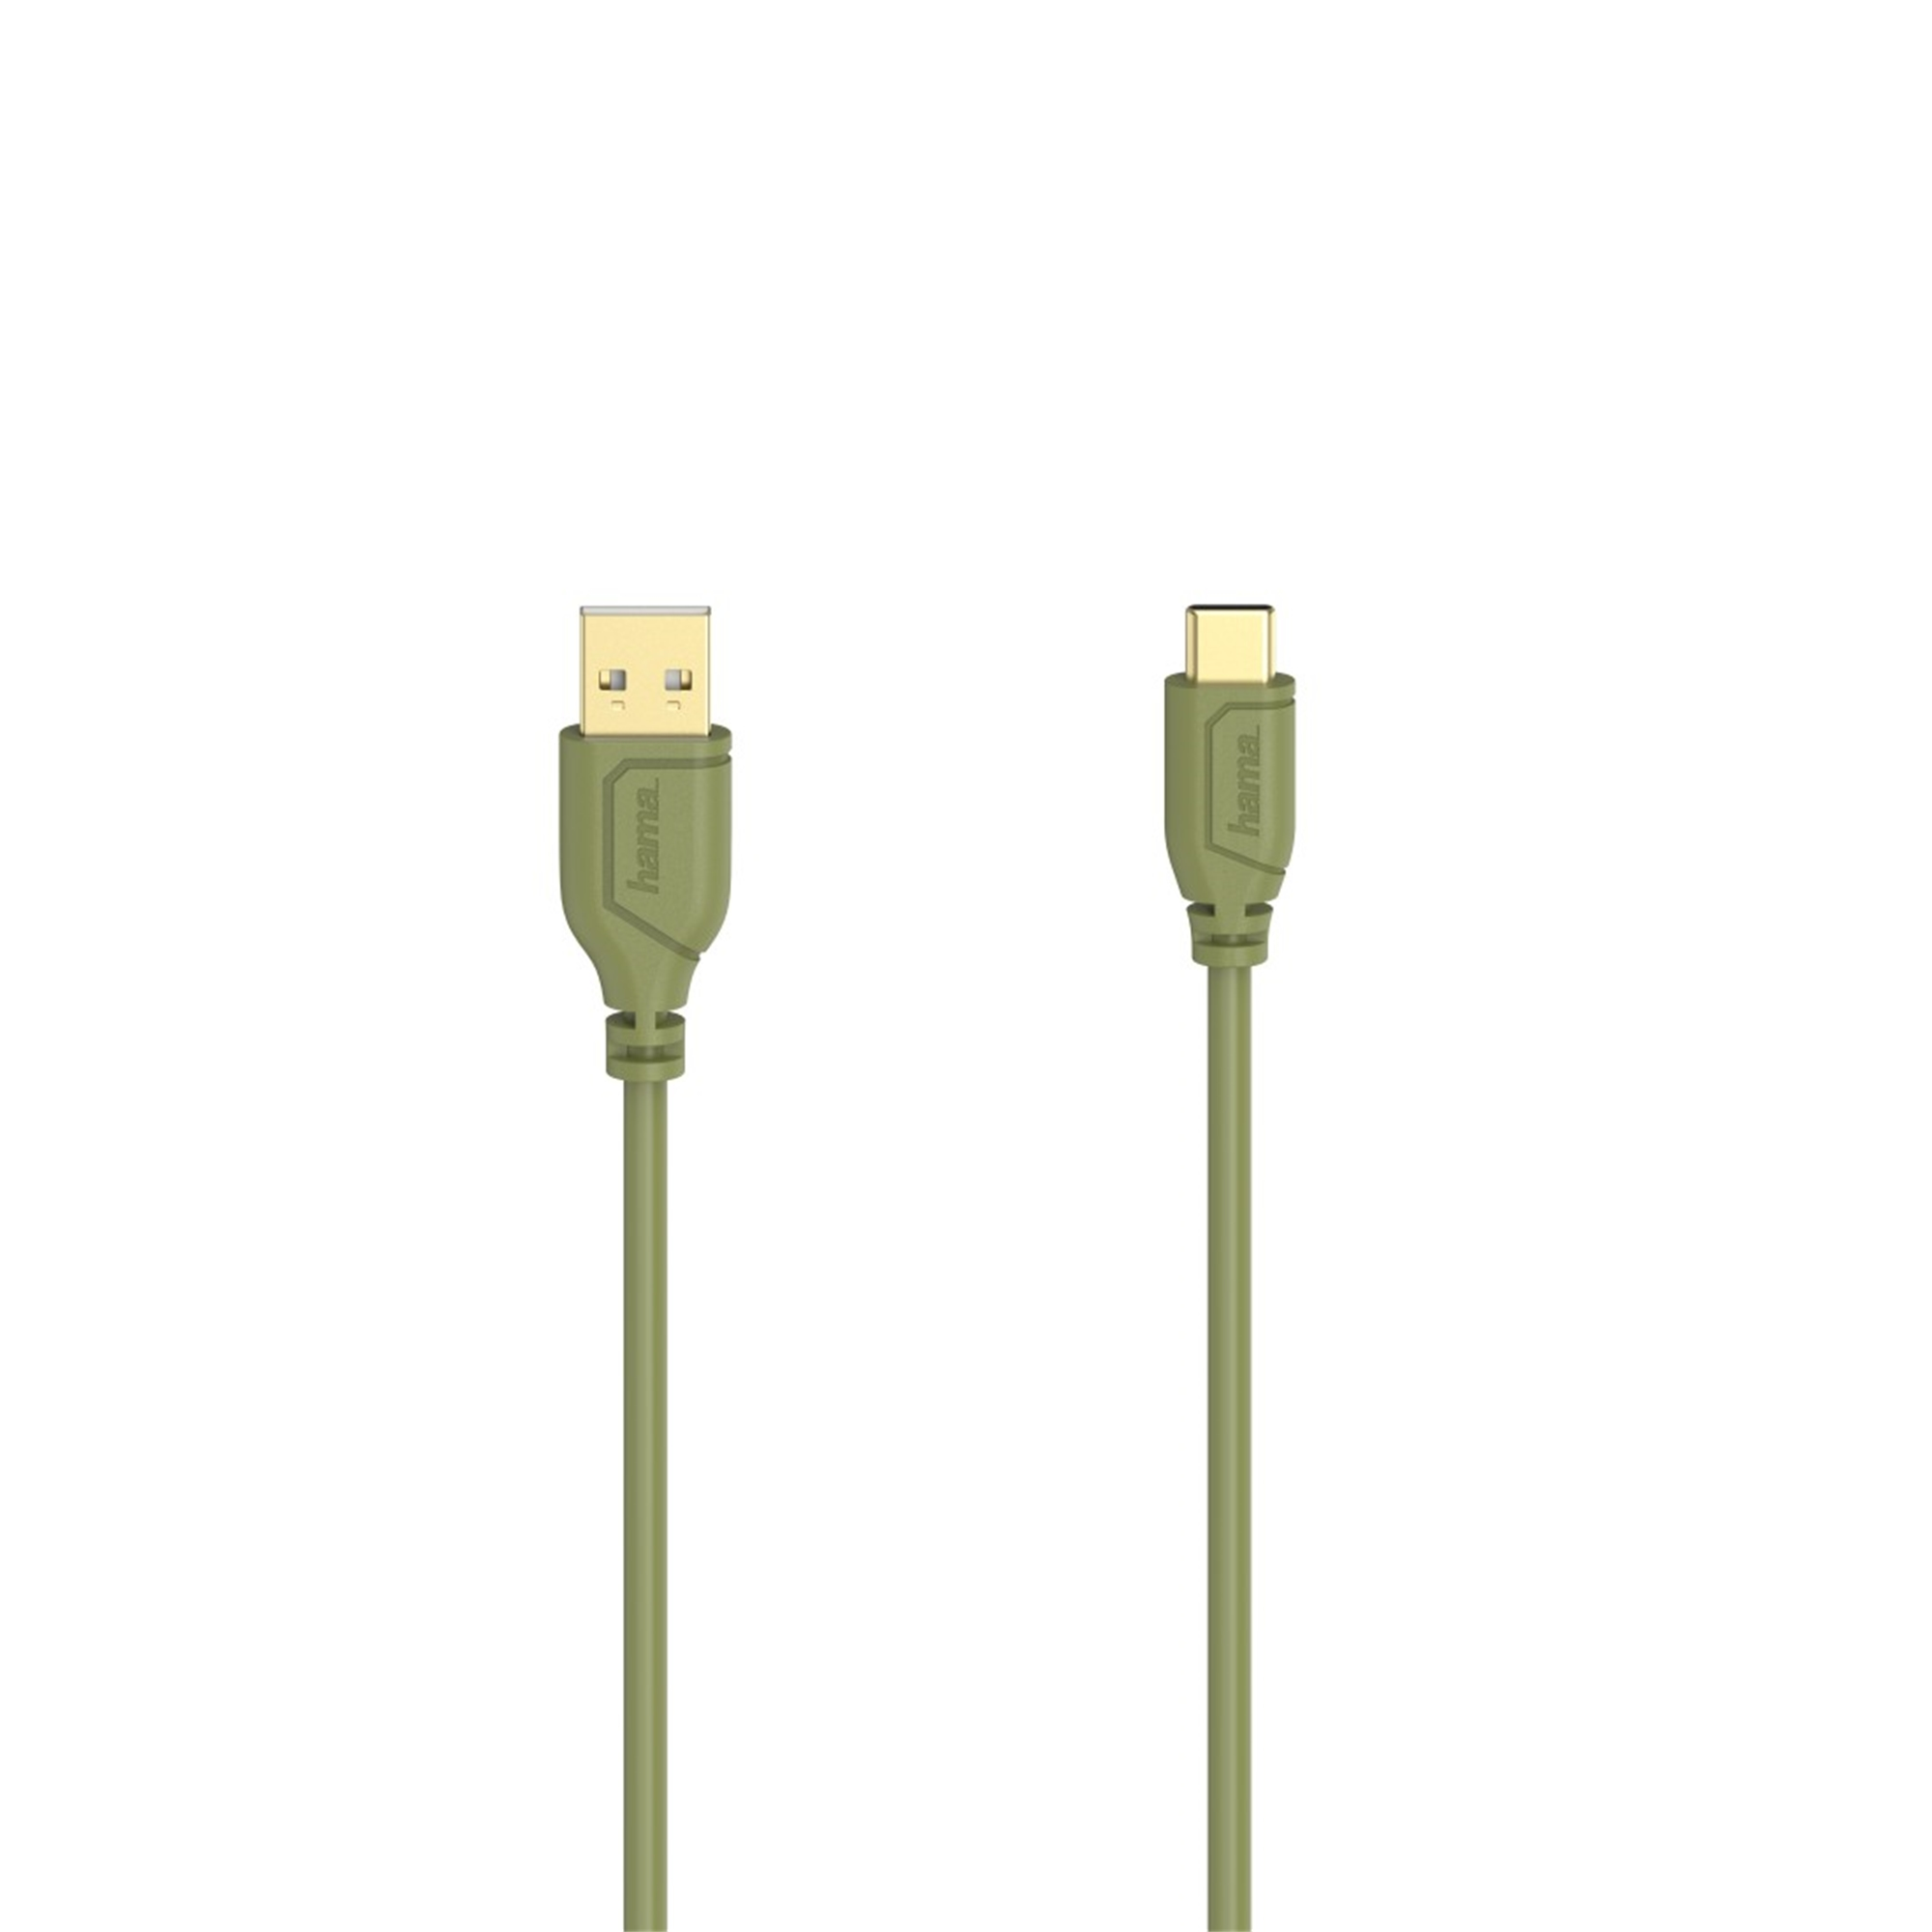 Green USB-C-Kabel HAMA 480 Turtle Mbit/s,